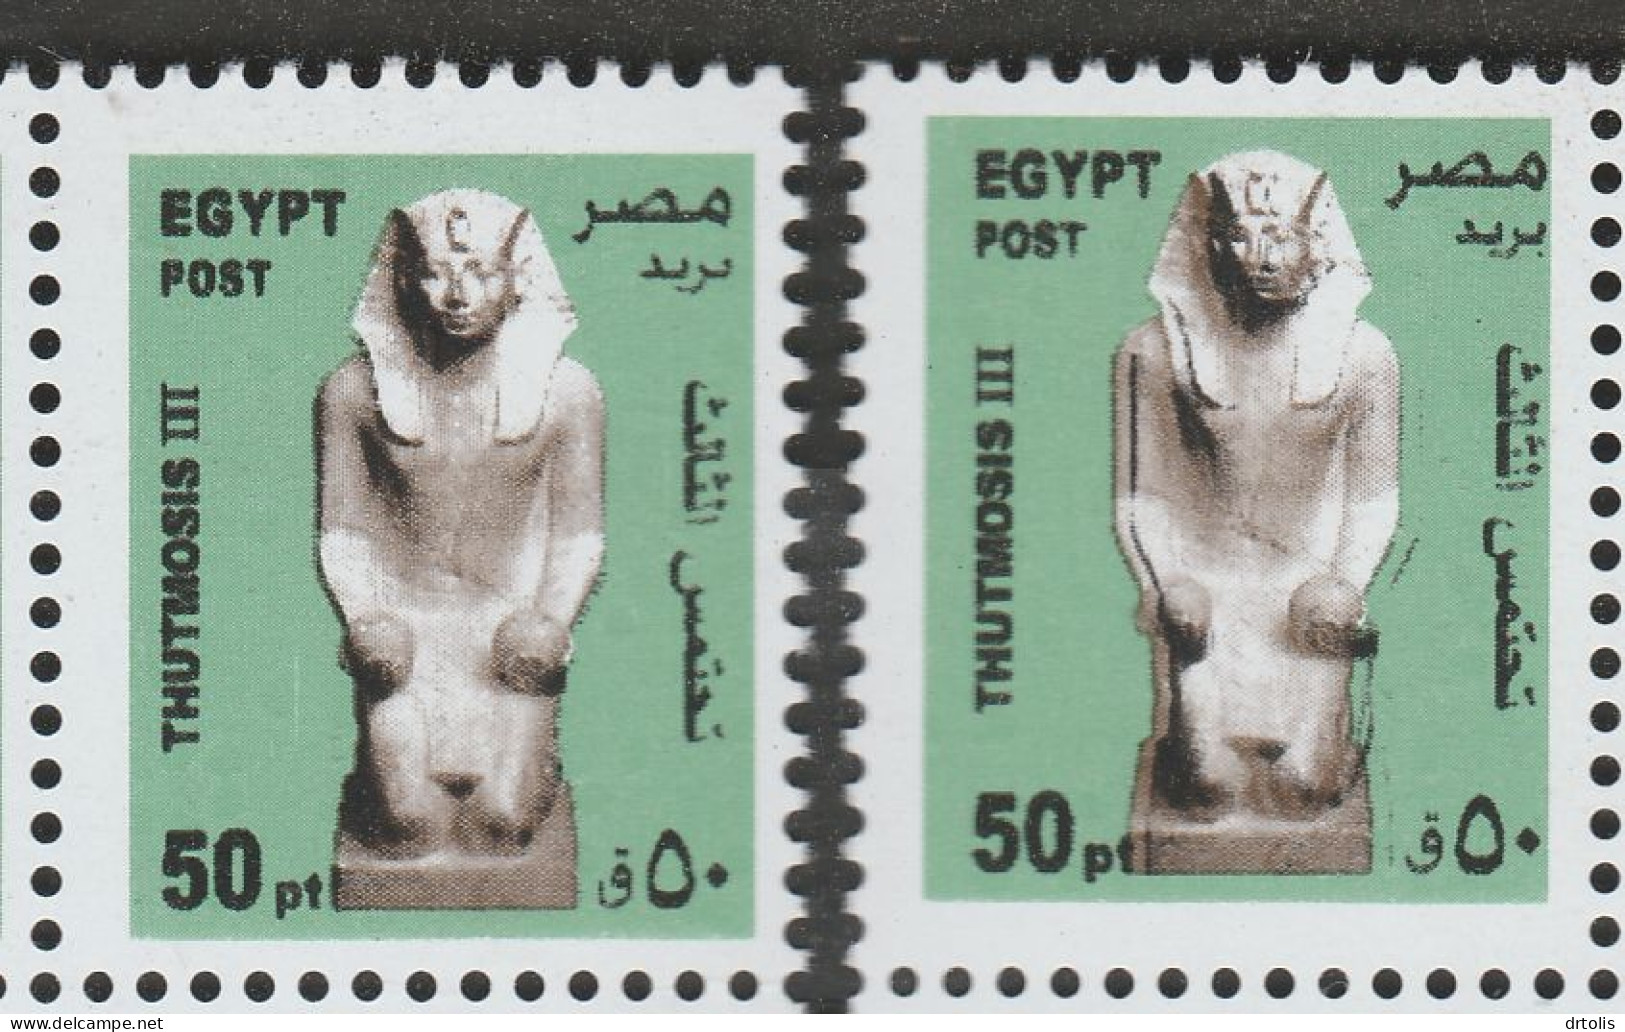 EGYPT / 2013 / A RARE PRINTING ERROR / THUTMOSE III / MNH / VF - Ungebraucht